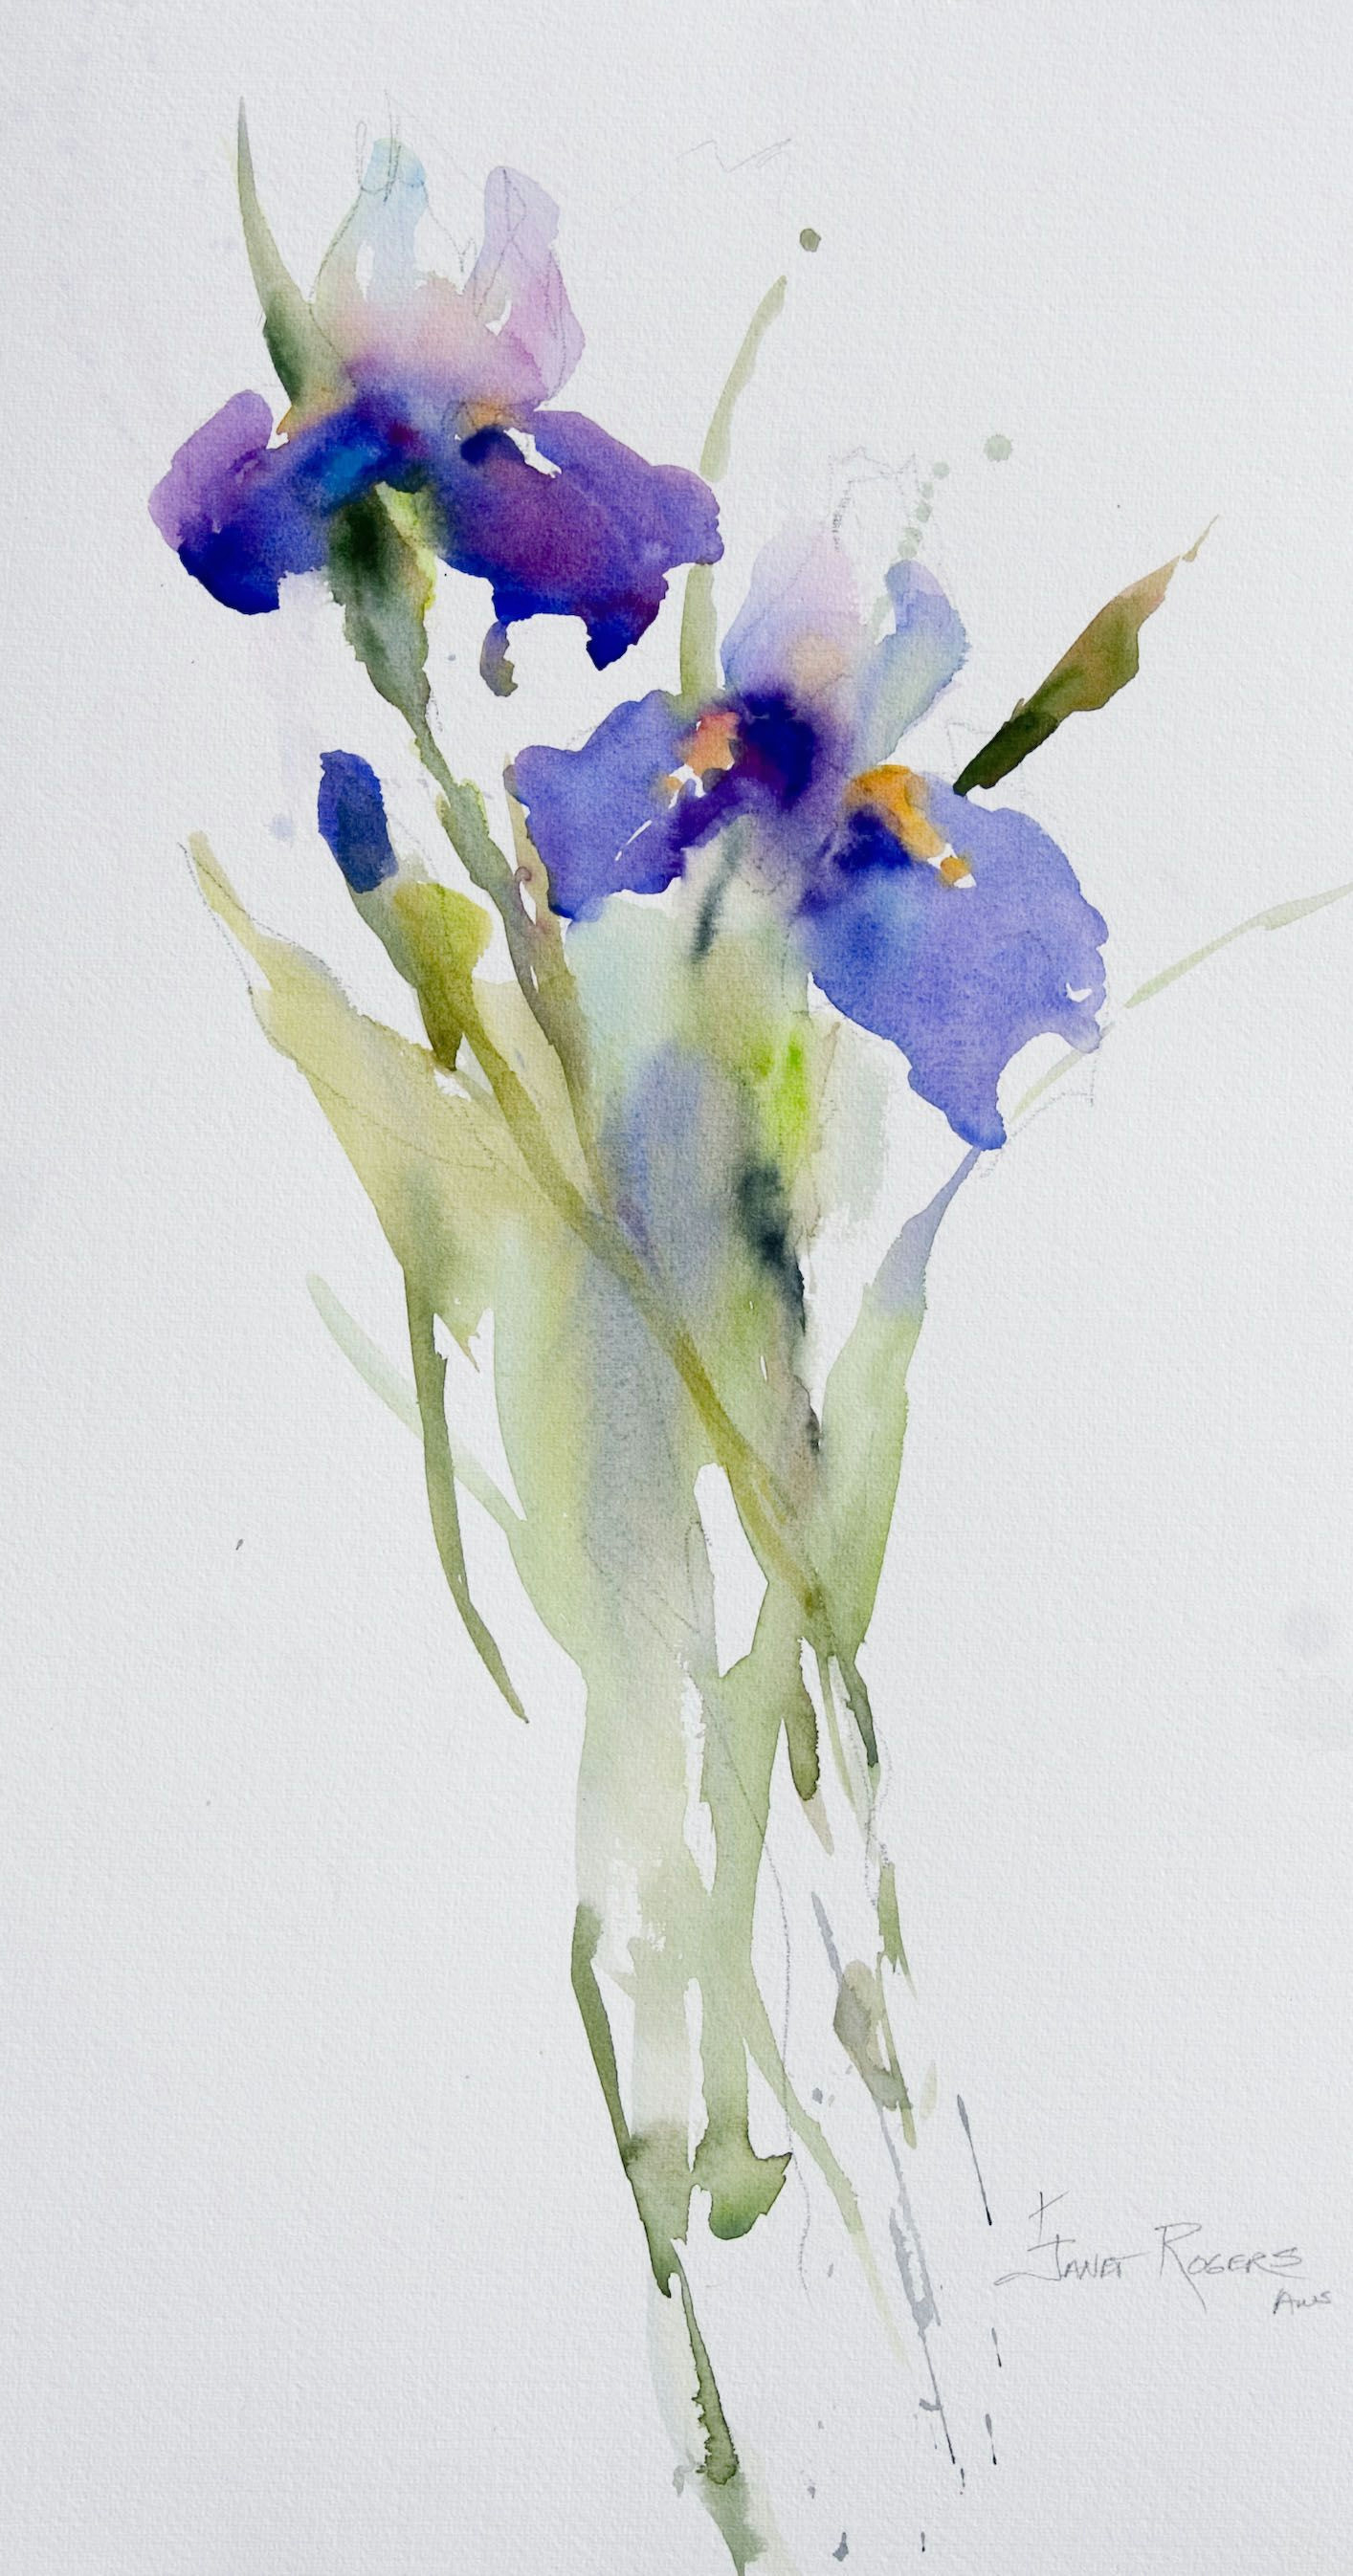 Drawings Of Iris Flowers Janet Rogers Irises Watercolor Pinterest Watercolor